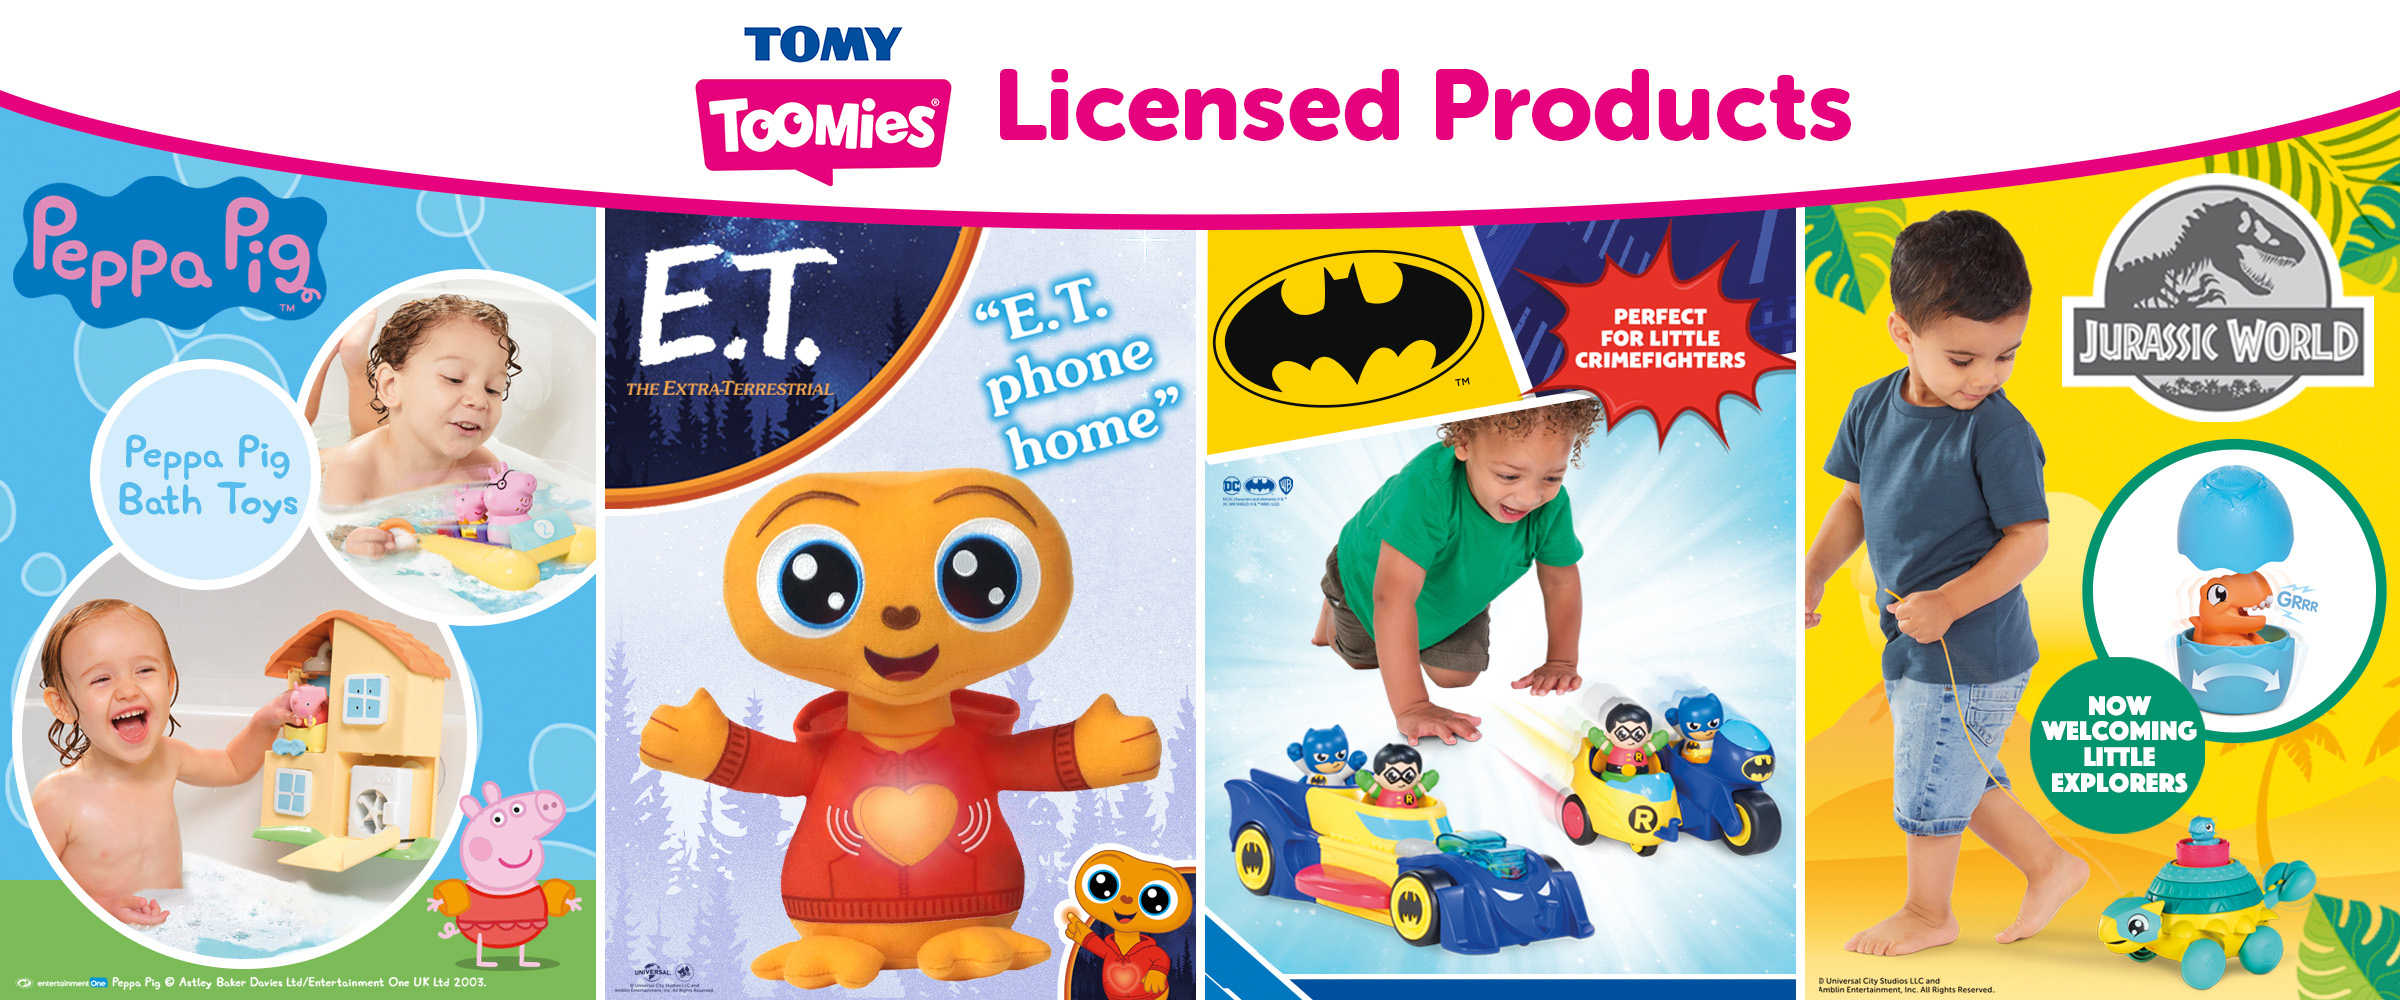 Toomies Licensed Products.